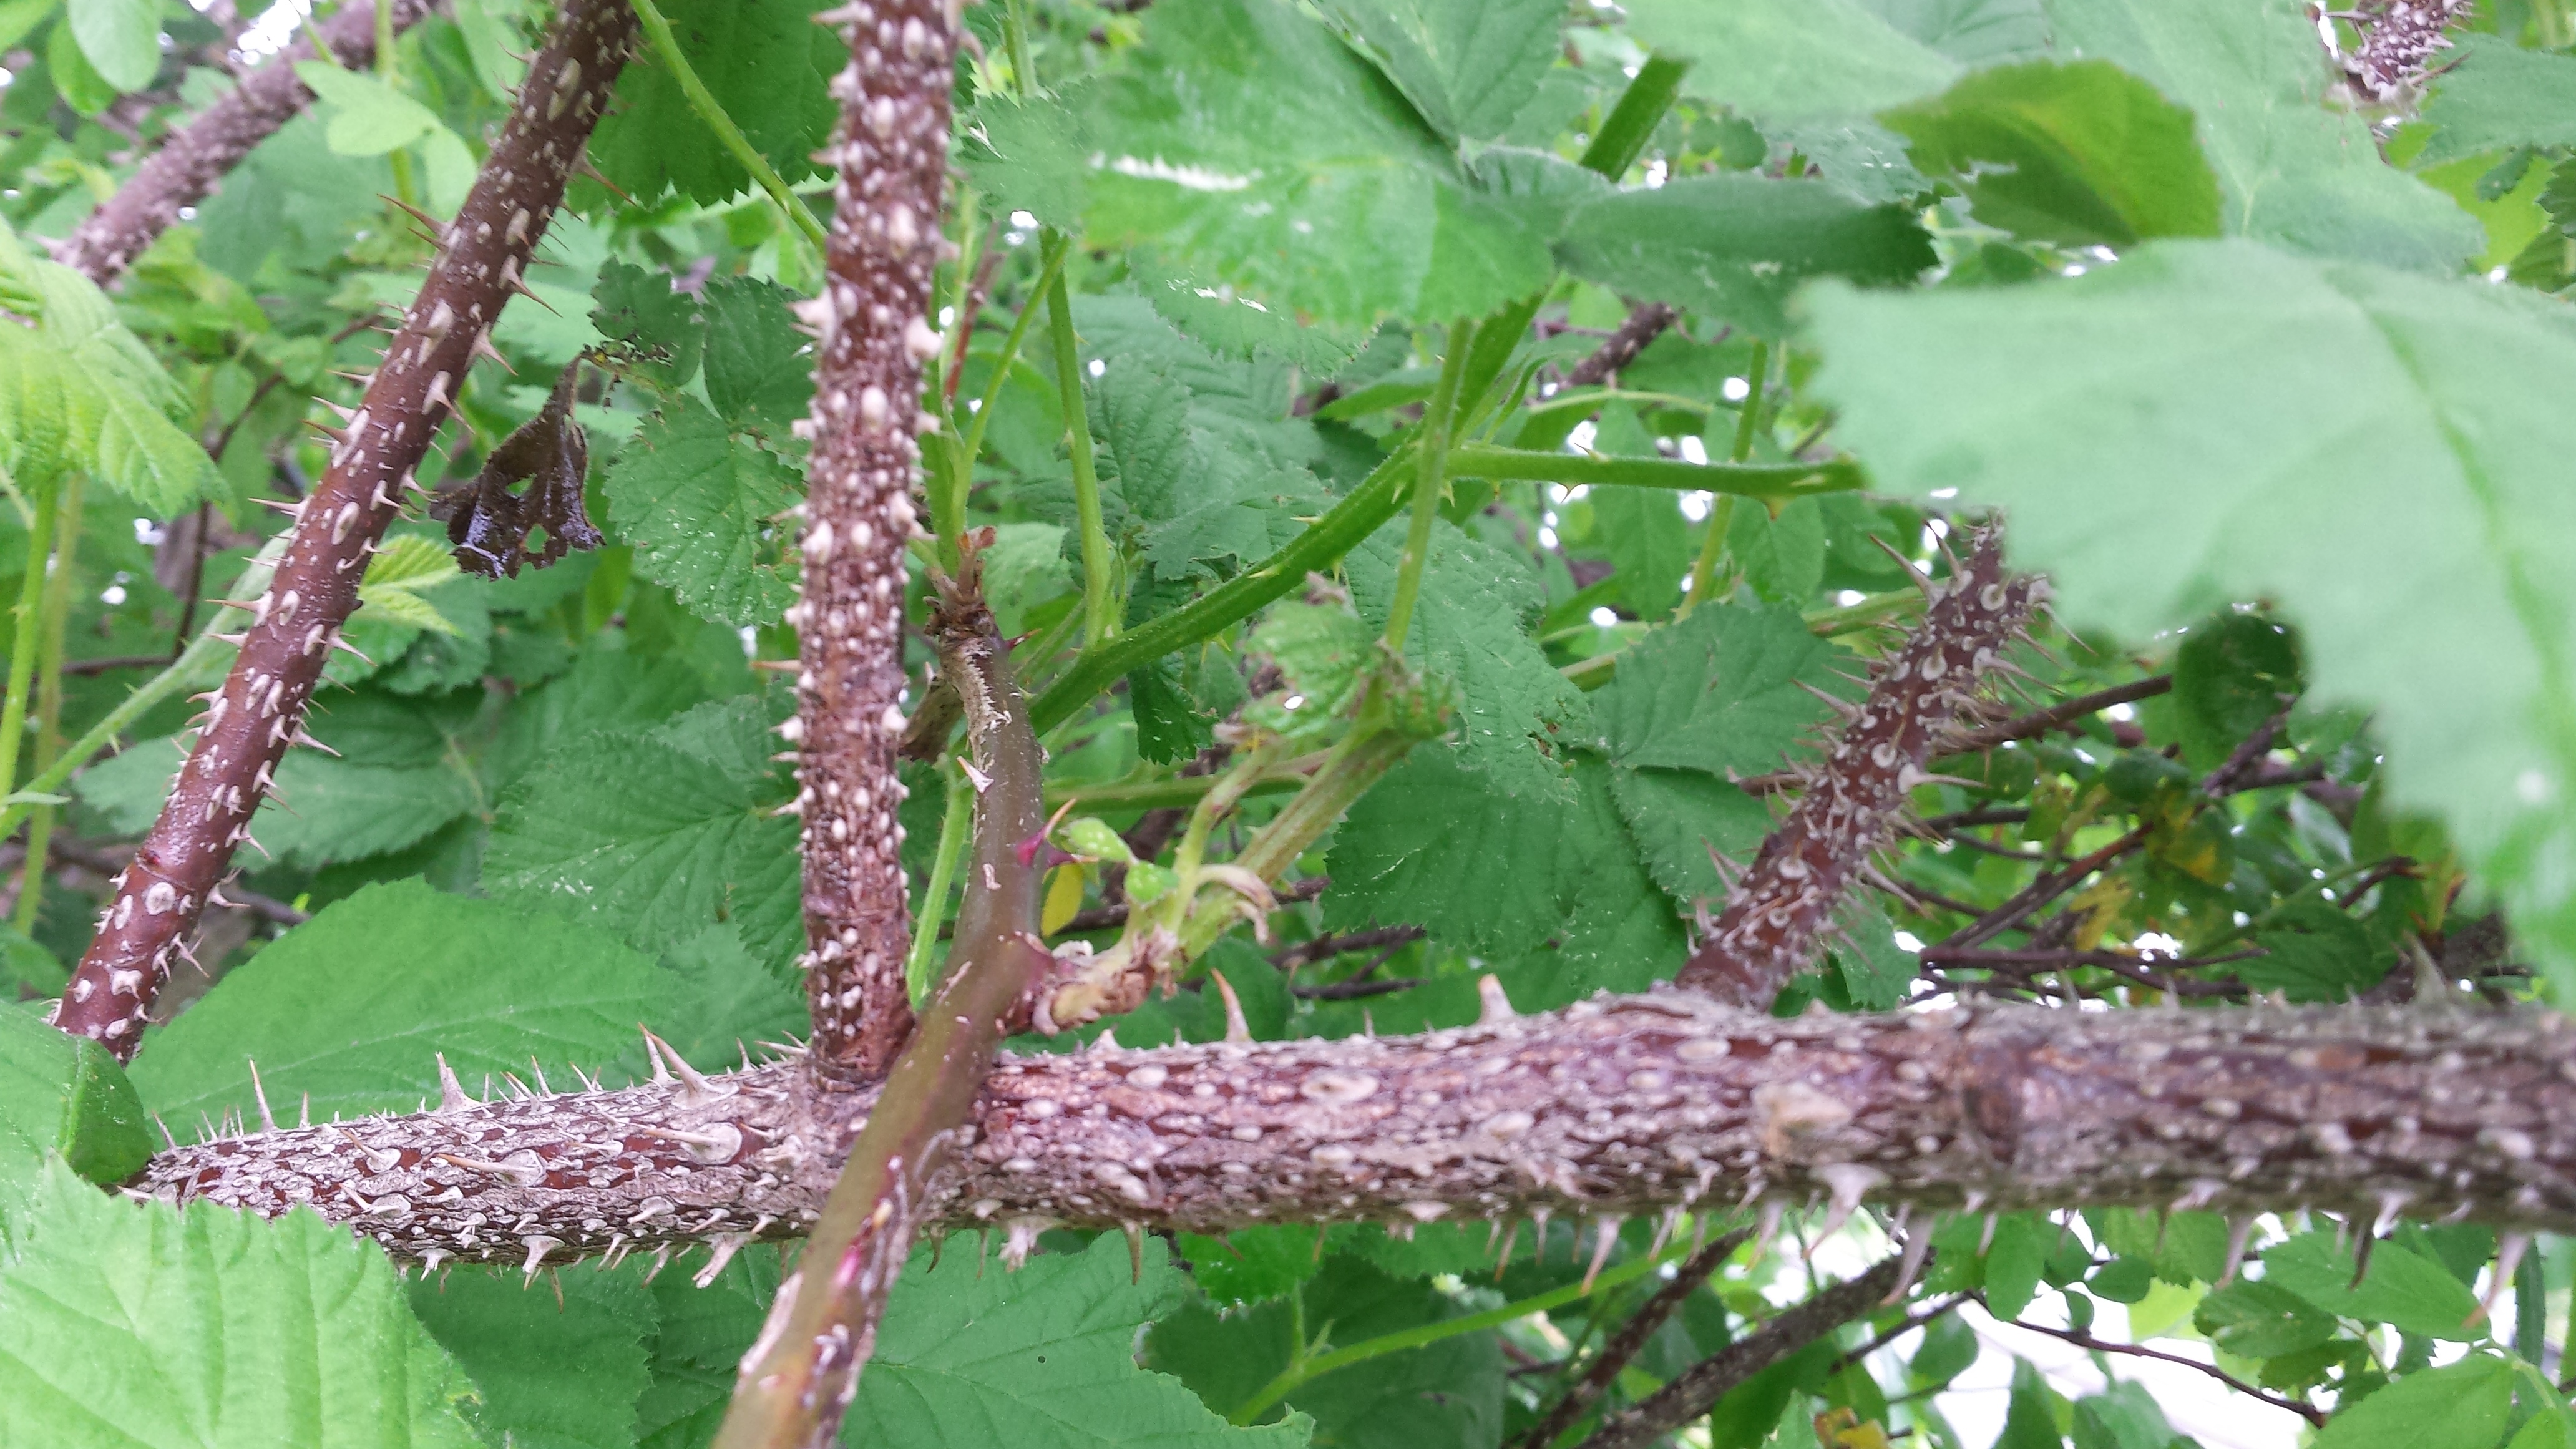 Crazy thorns tree/bush..grown between cherry tree, blackberry bushes ...